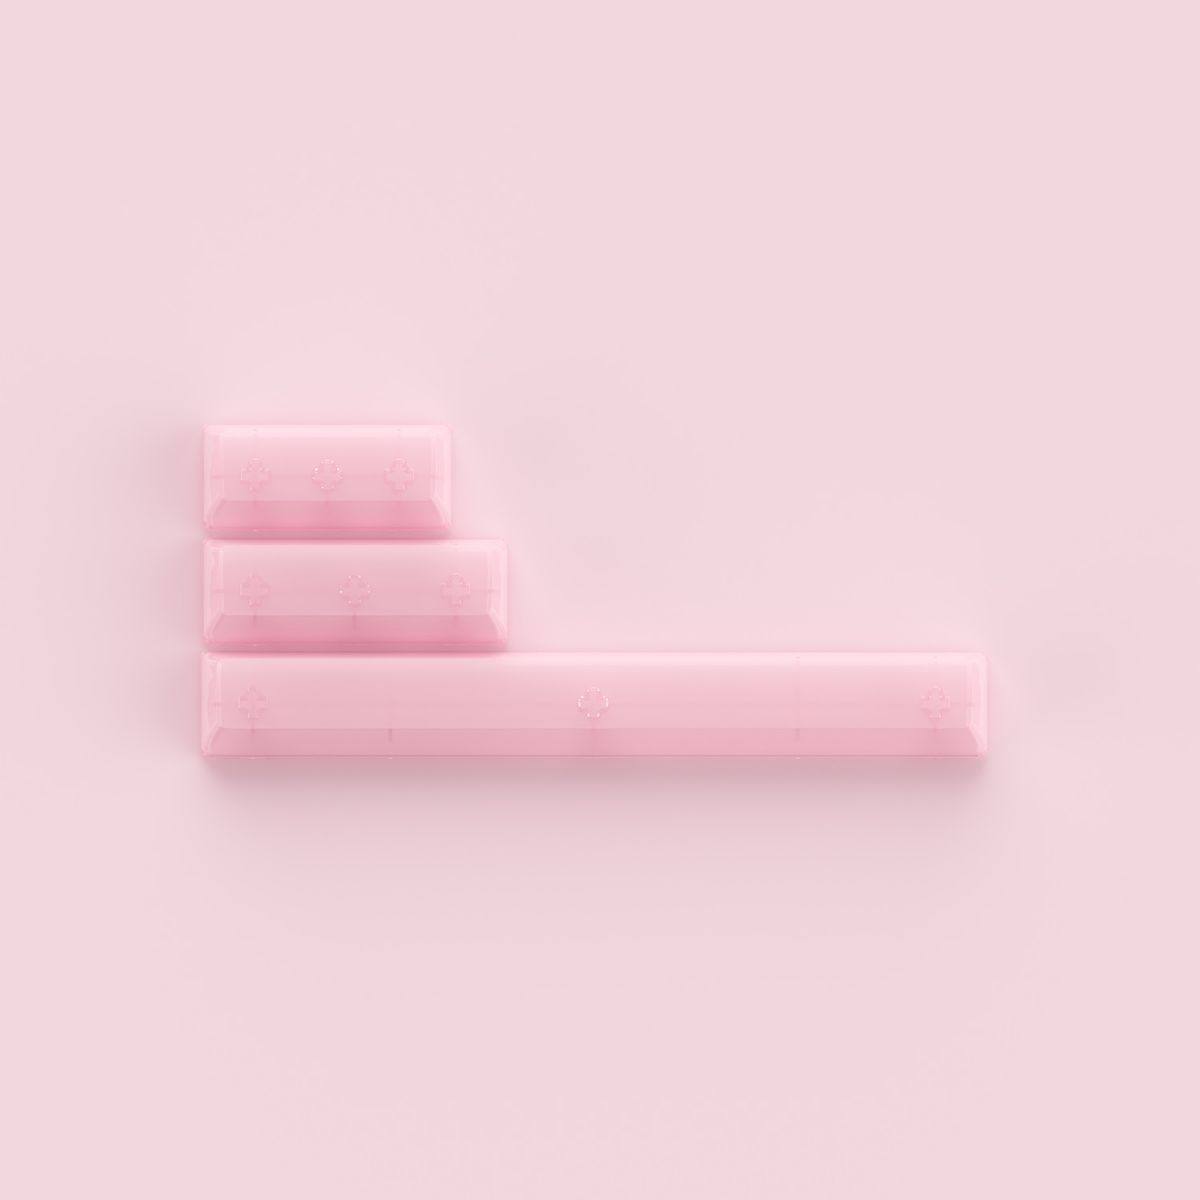 Set Keycap Akko Clear Pink | ASA-Clear profile